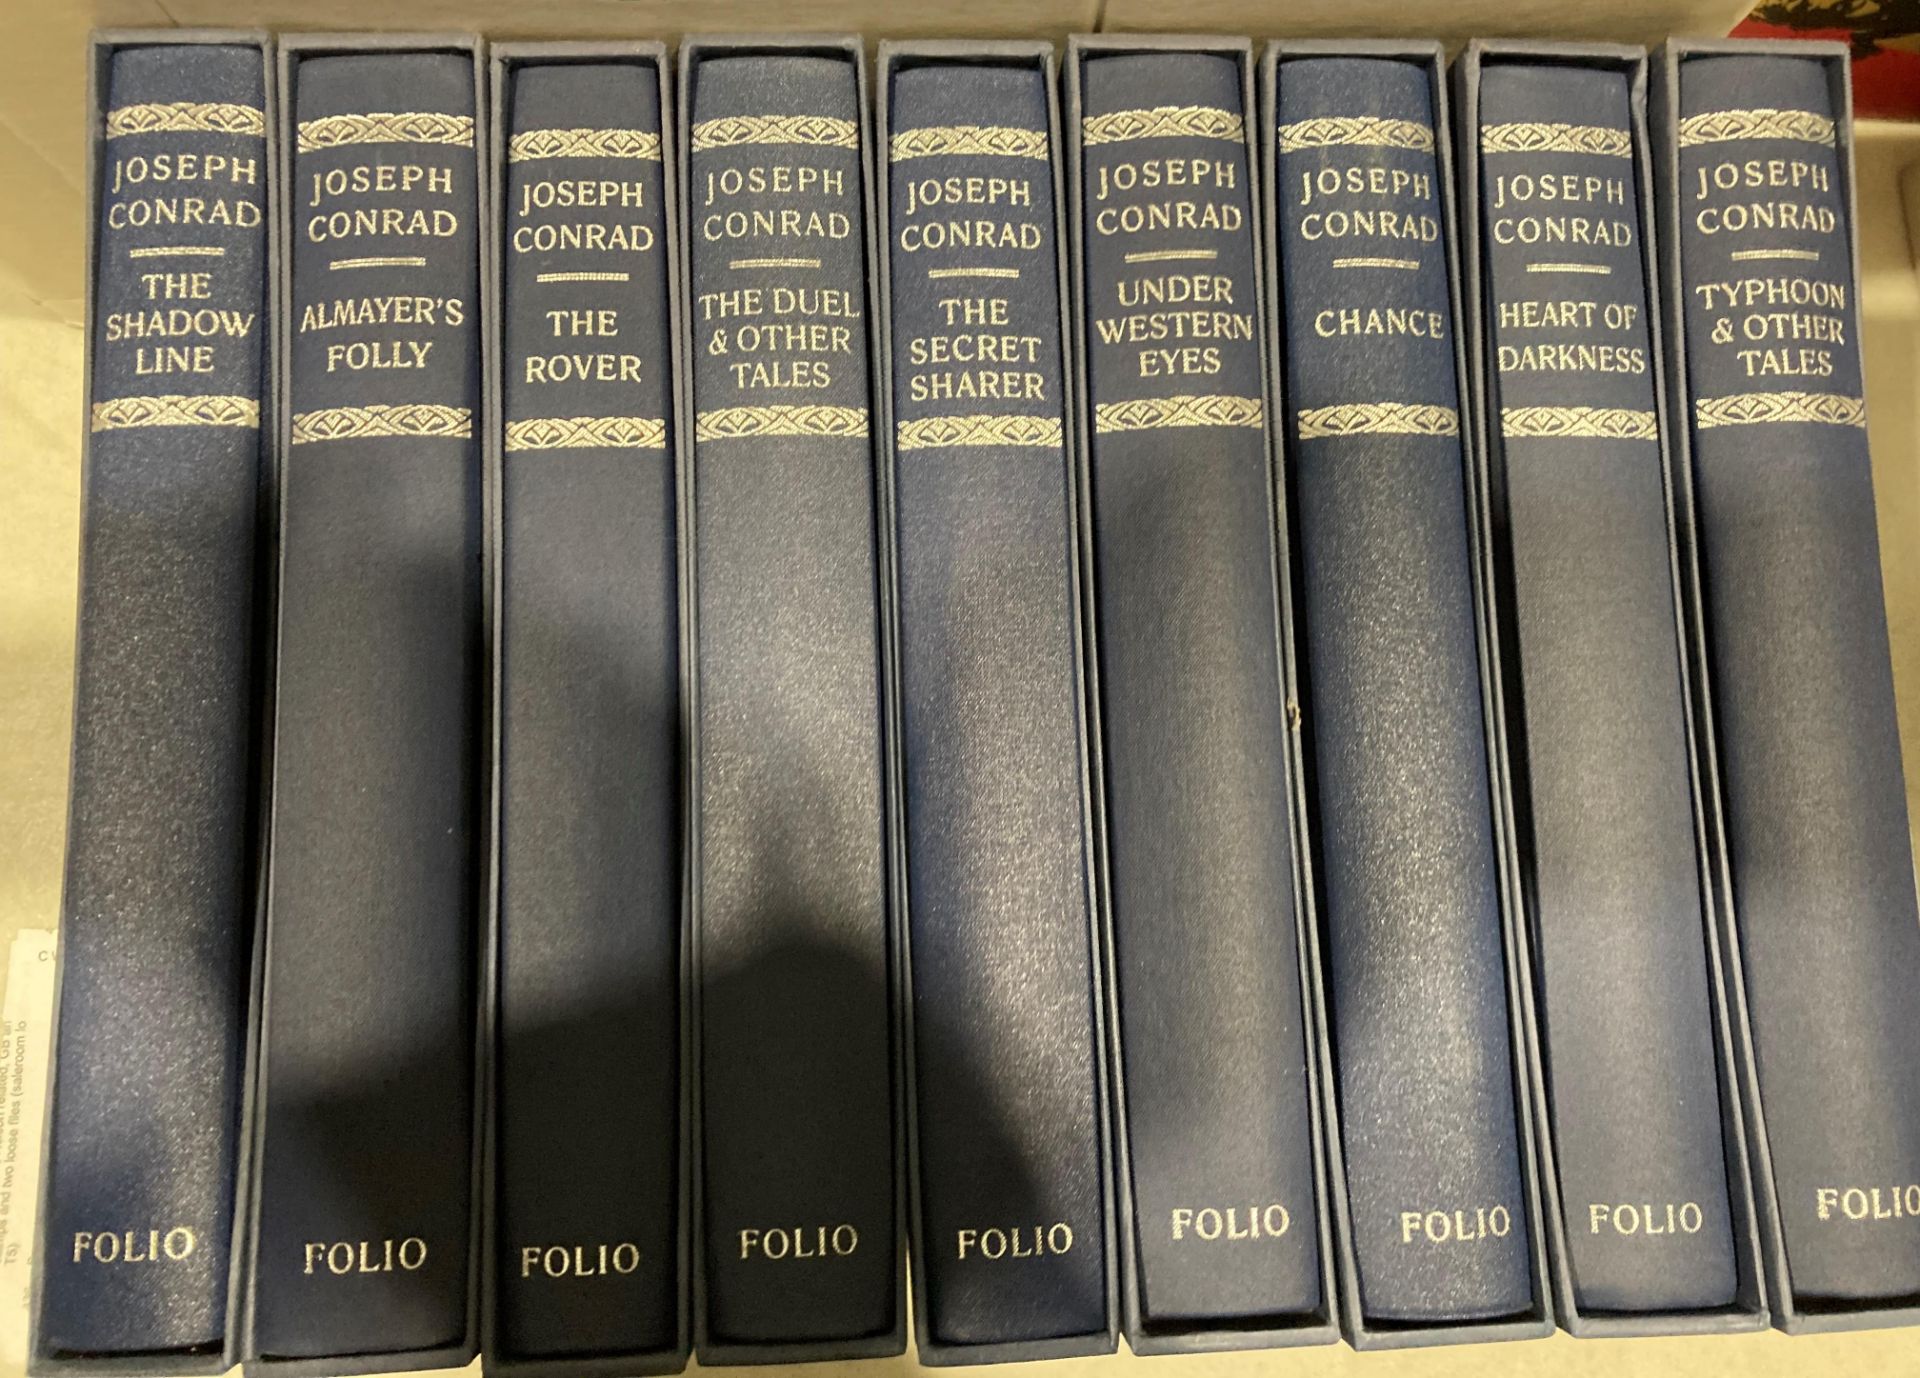 Folio Society - Joseph Conrad, nine books in covers - 'The Shadow Lines', 'Almayer's Folly',